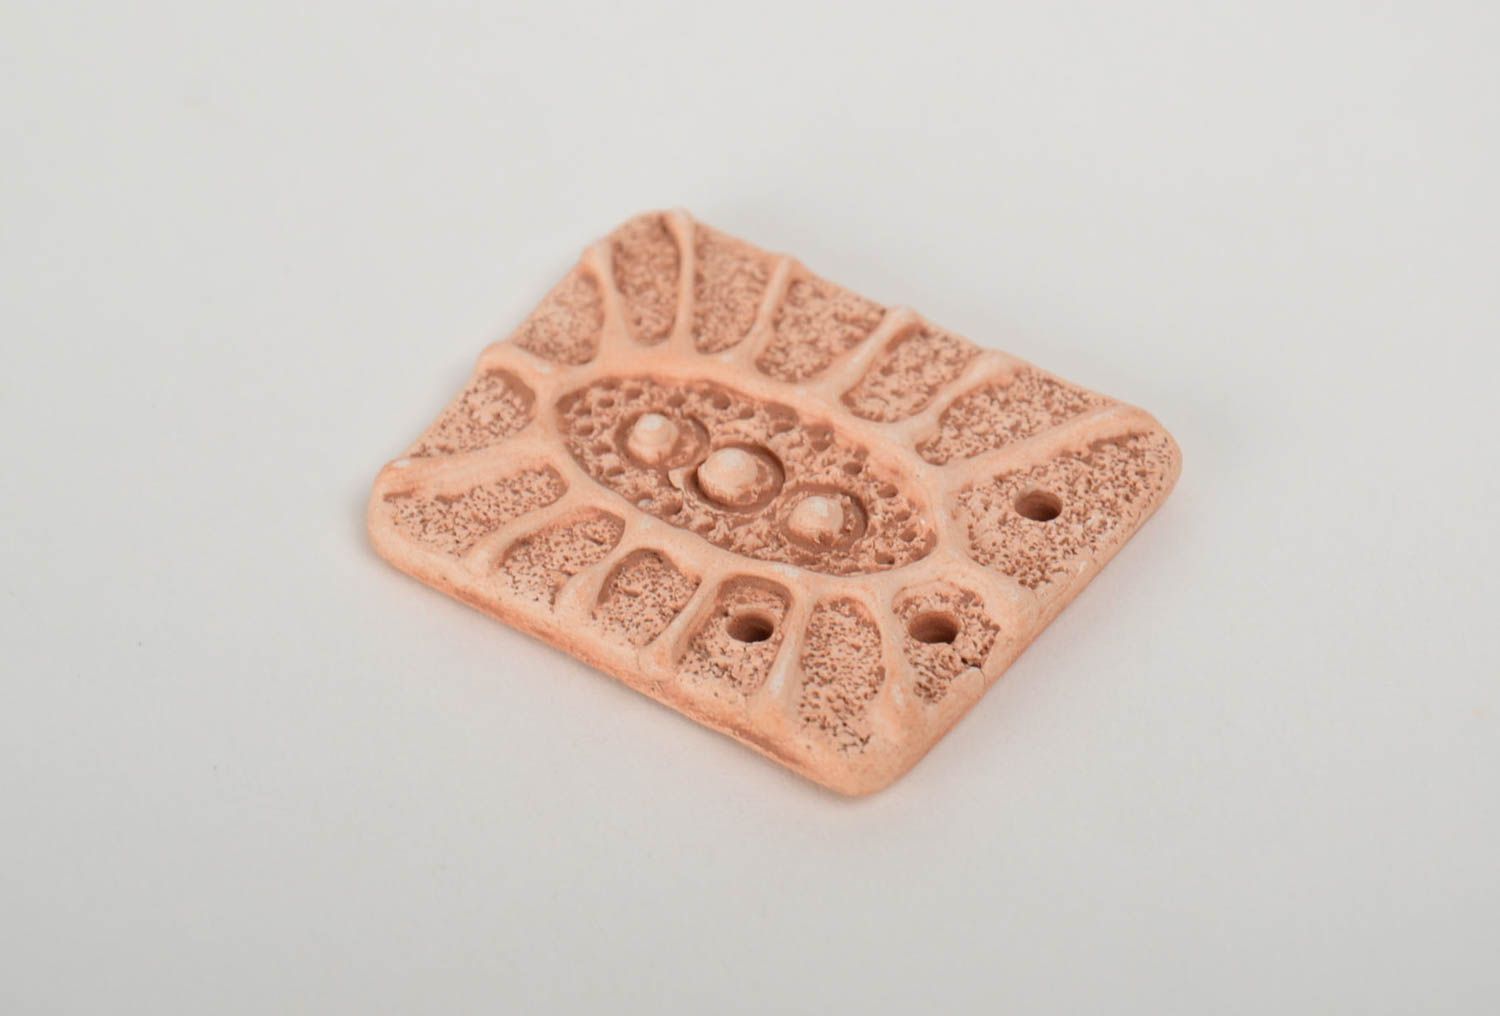 Homemade designer clay craft blank pendant DIY jewelry making supplies photo 4